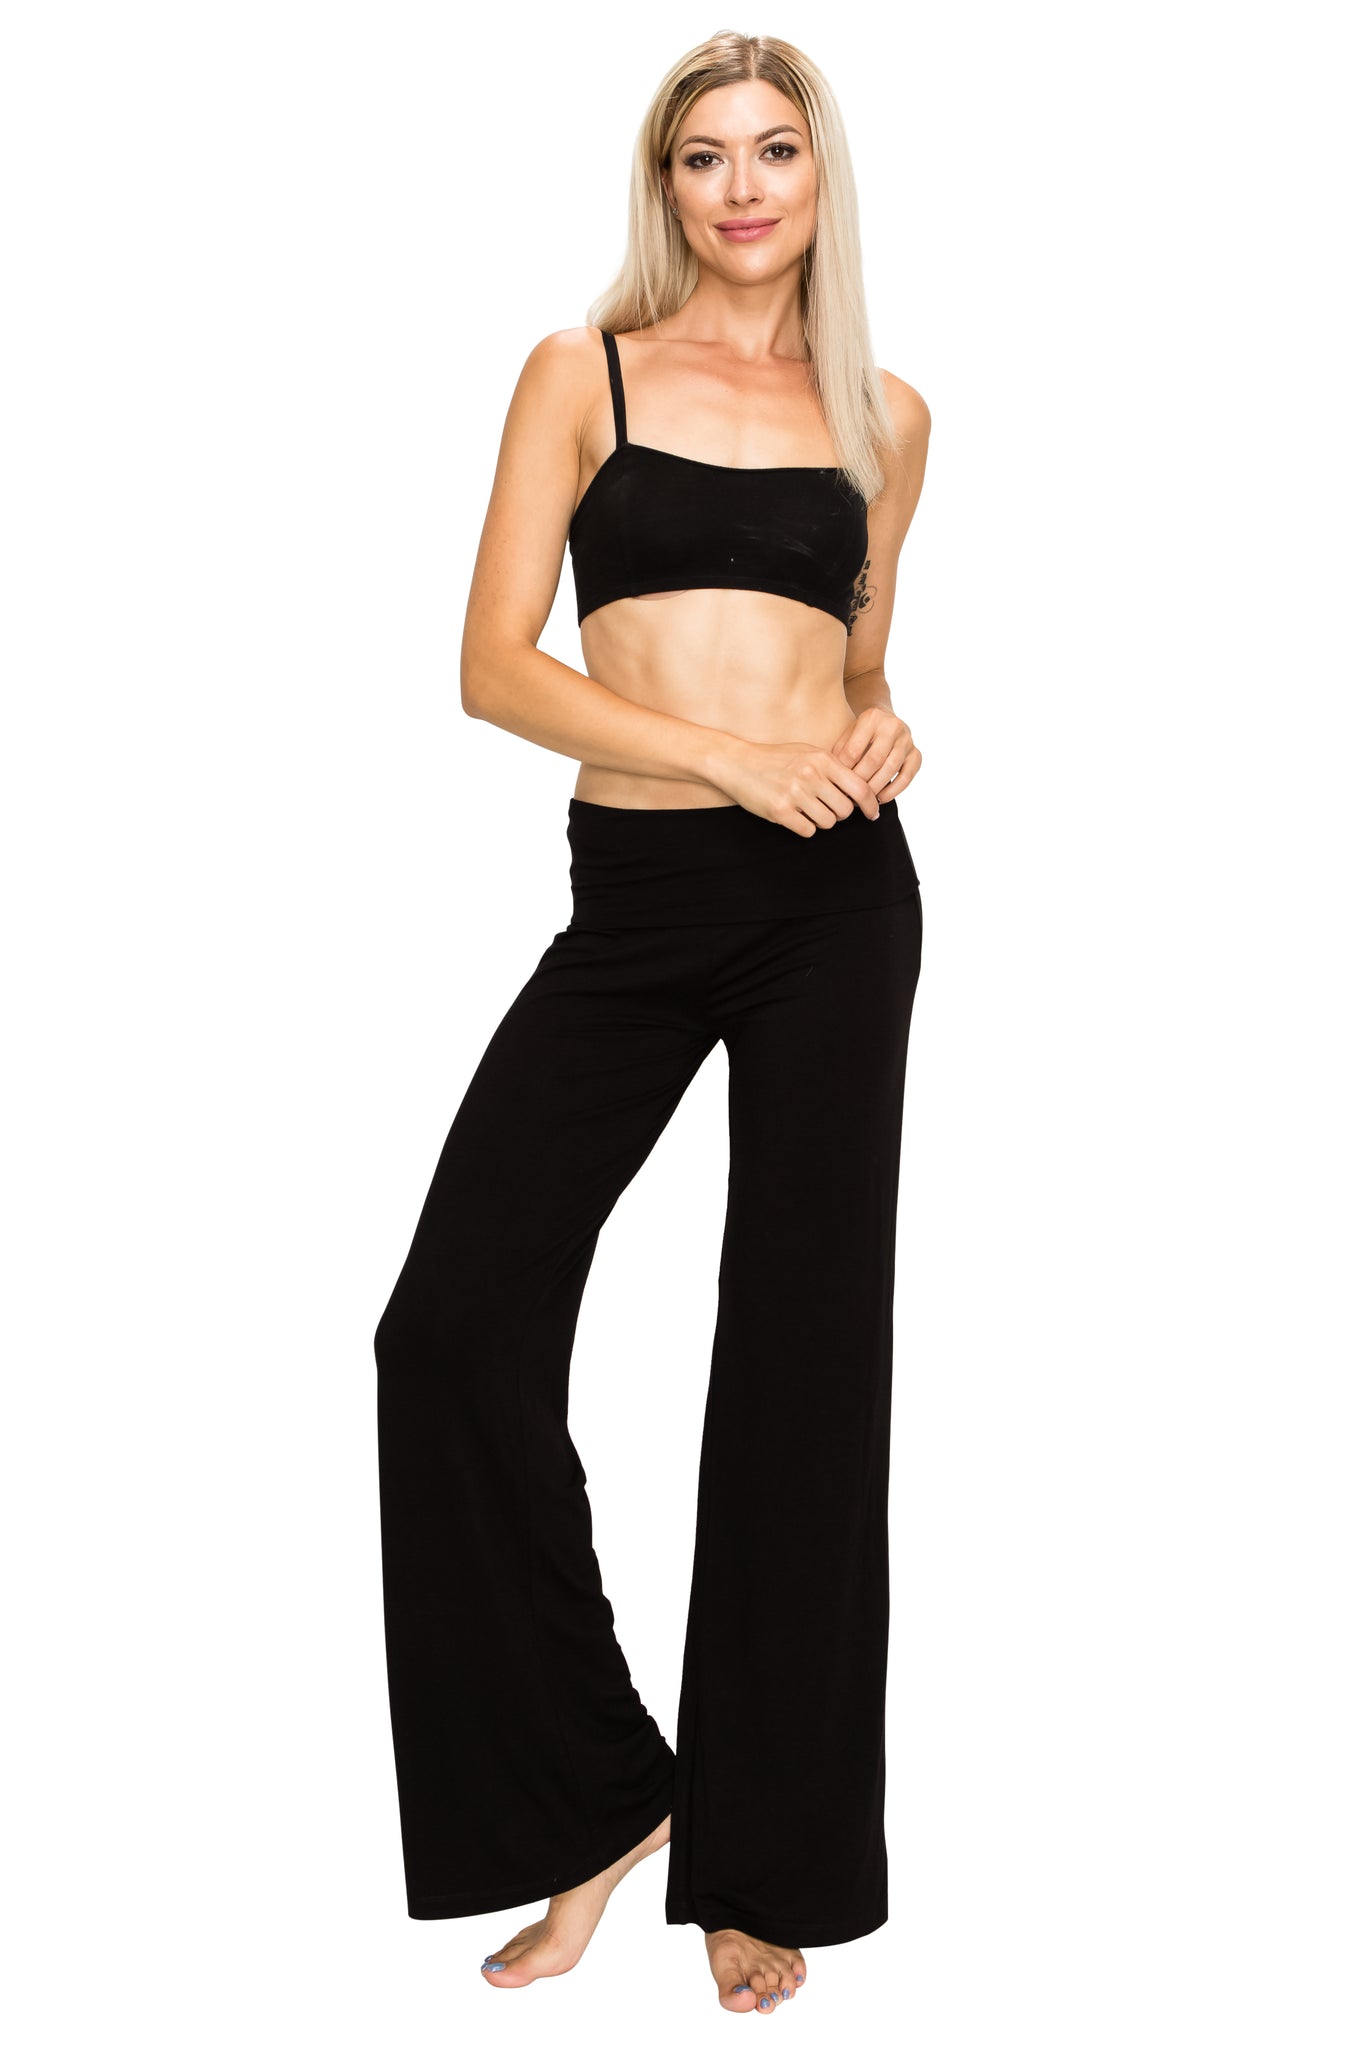 Black Foldover Yoga Pants - Poplooks